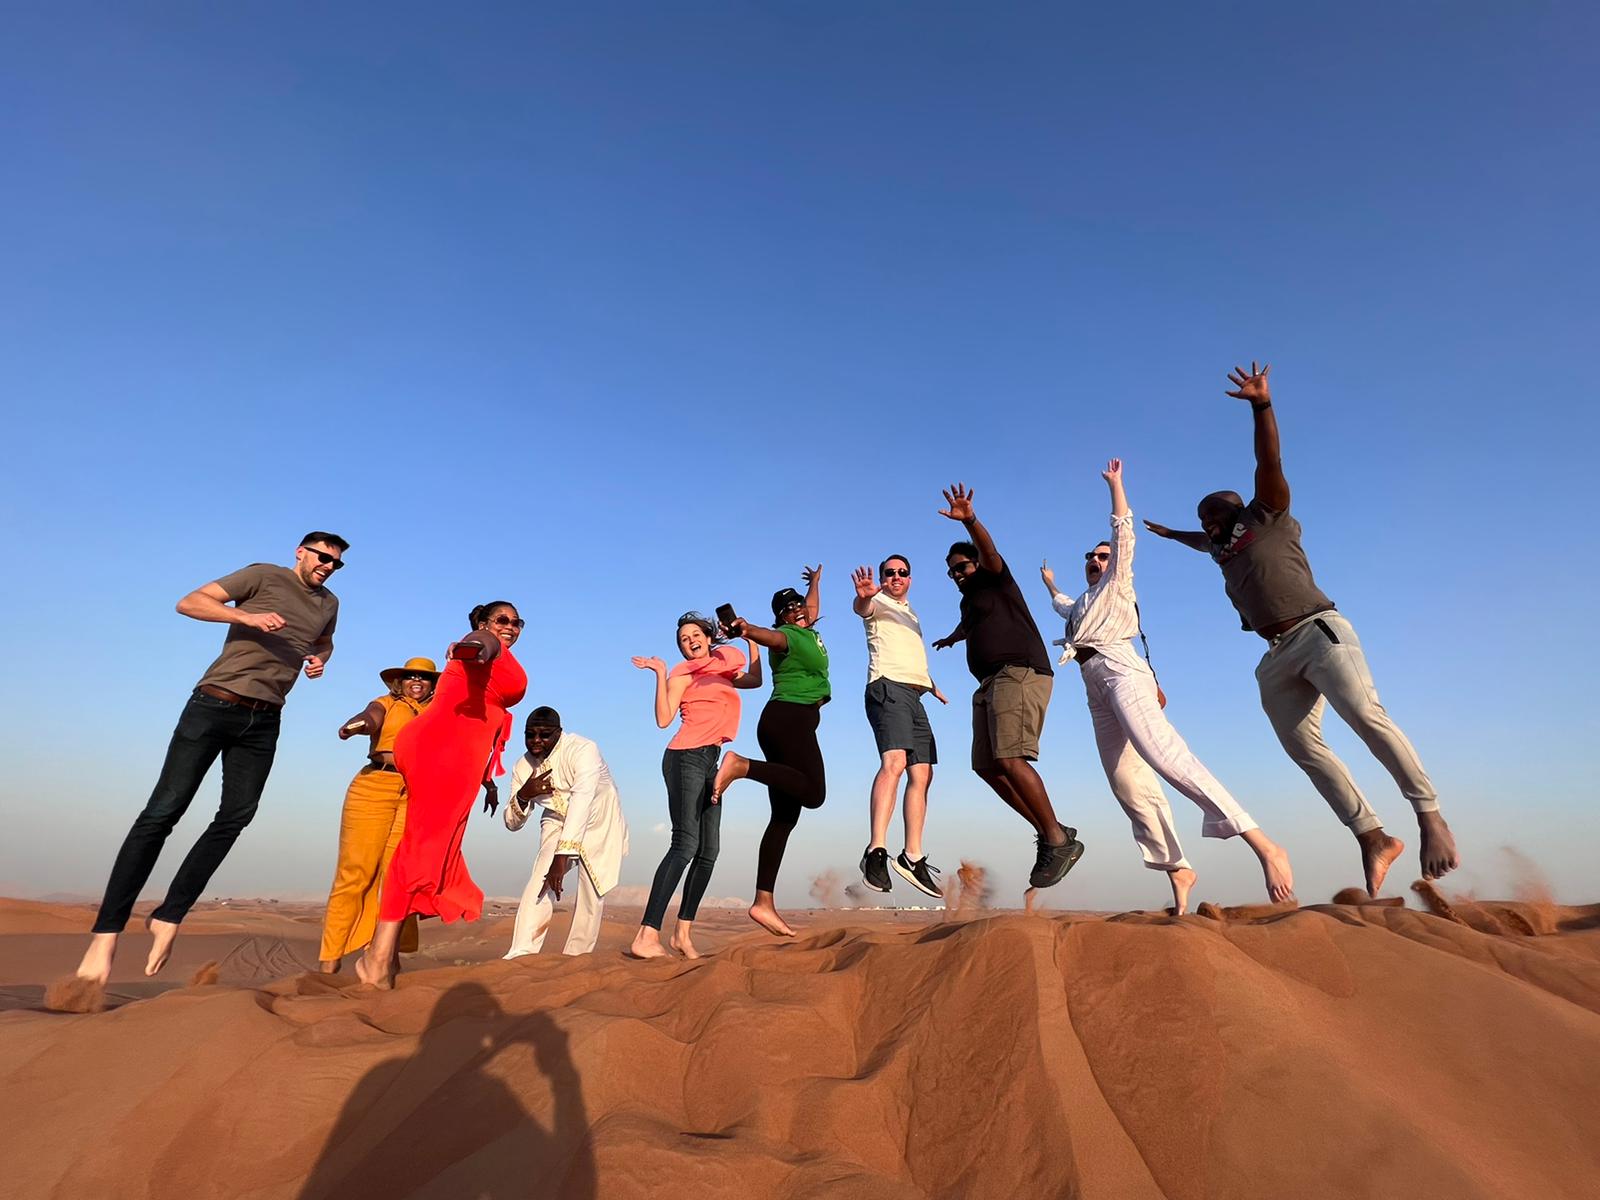 UTA Executive MBA Cohort jumping on a sand dune in UAE during international trip